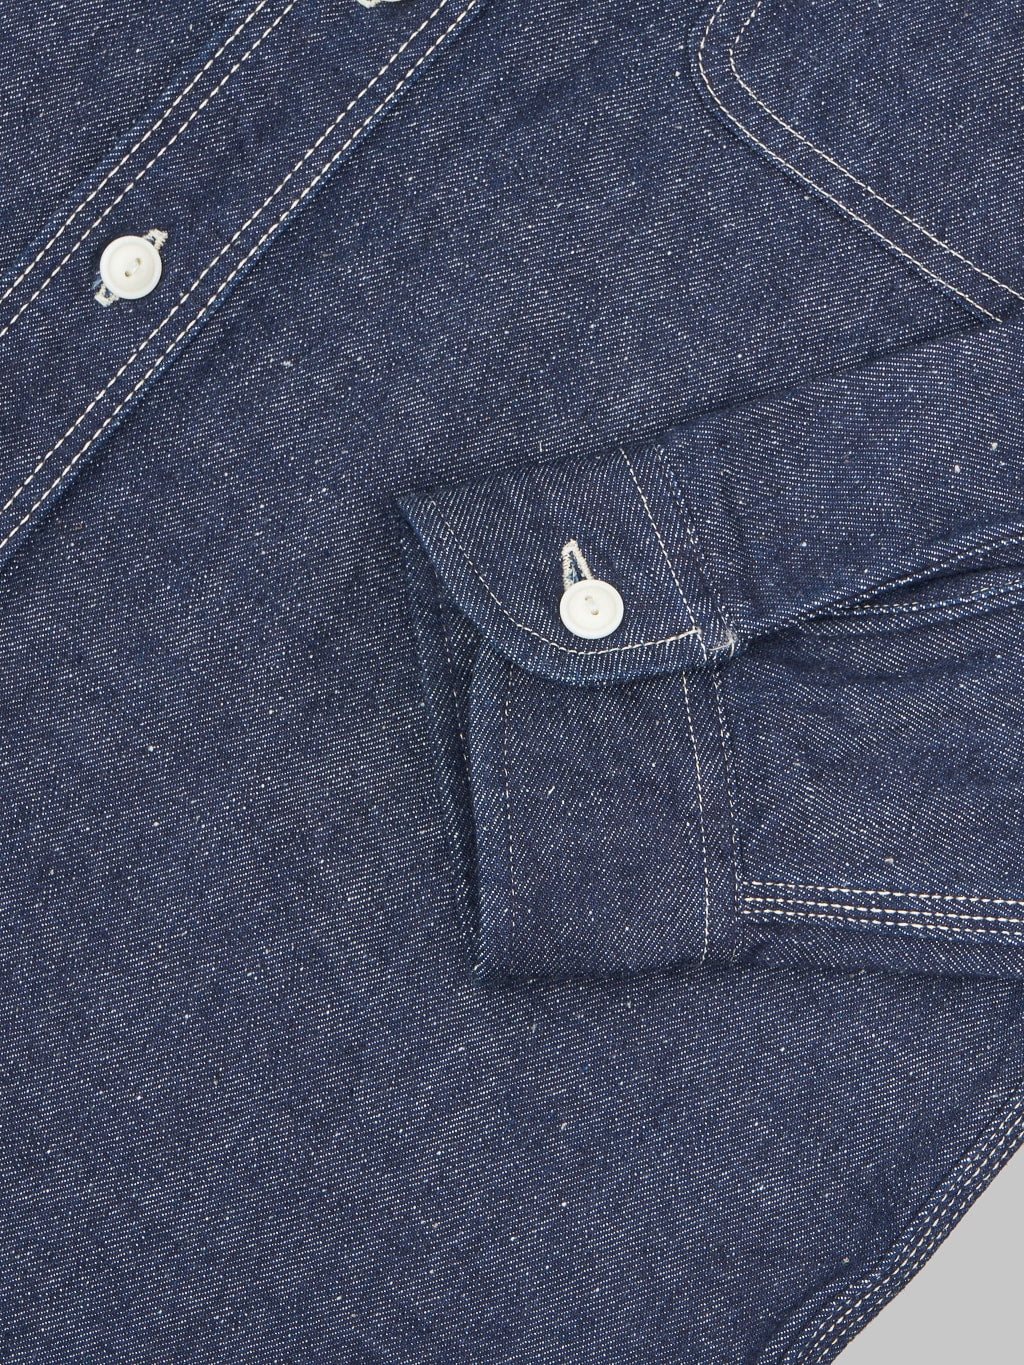 Samurai jeans denim work shirt fabric cuff